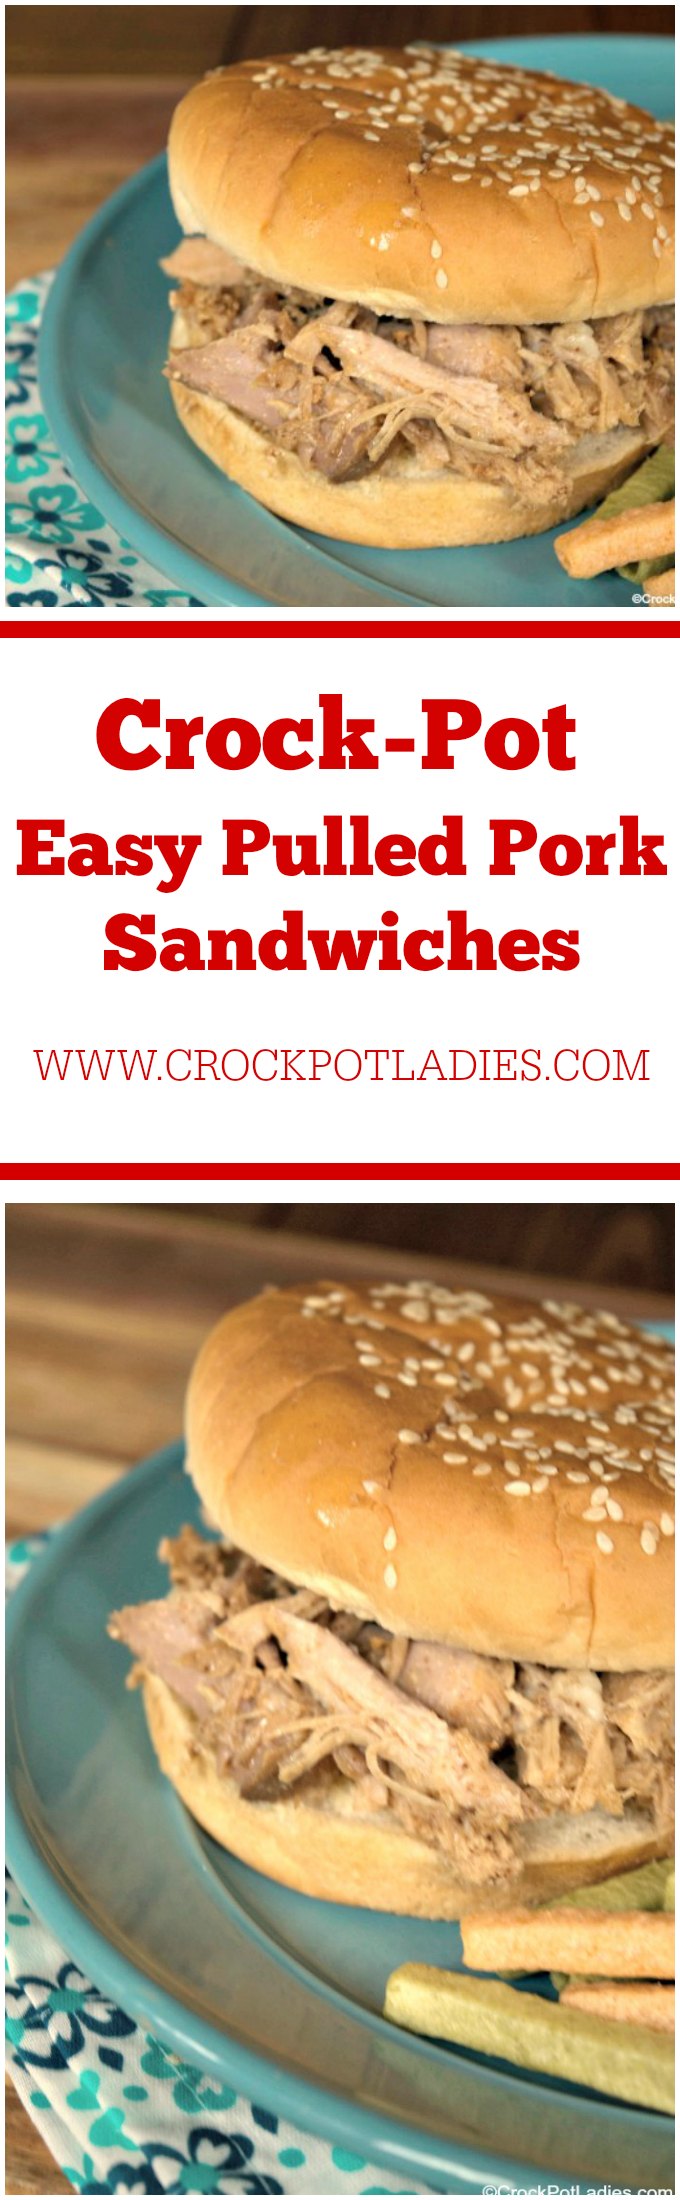 Crock-Pot Easy Pulled Pork Sandwiches